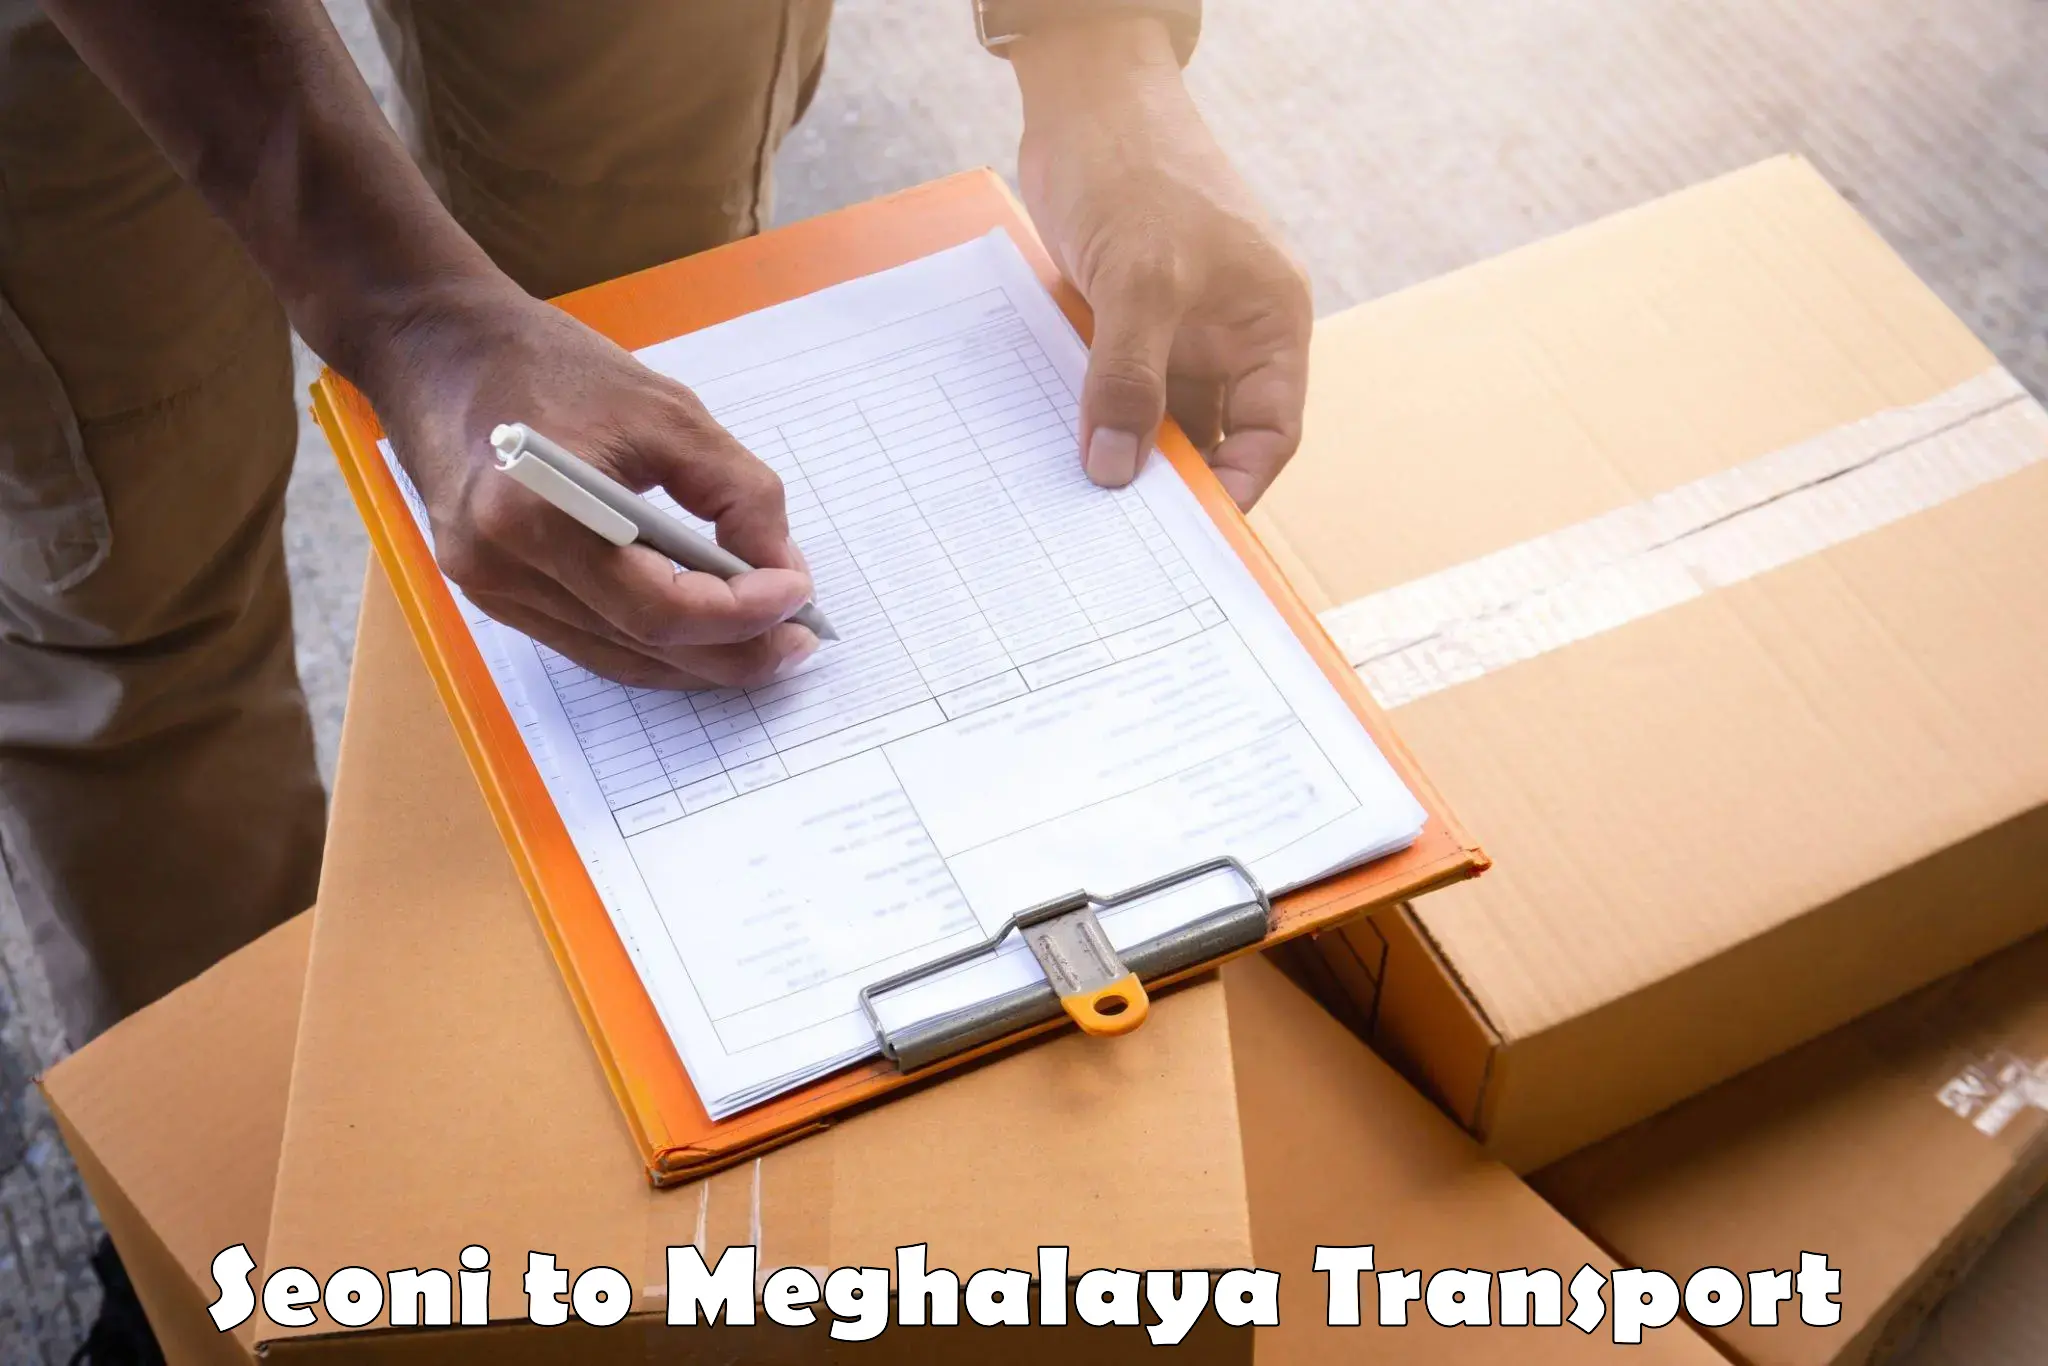 Transport in sharing Seoni to Meghalaya